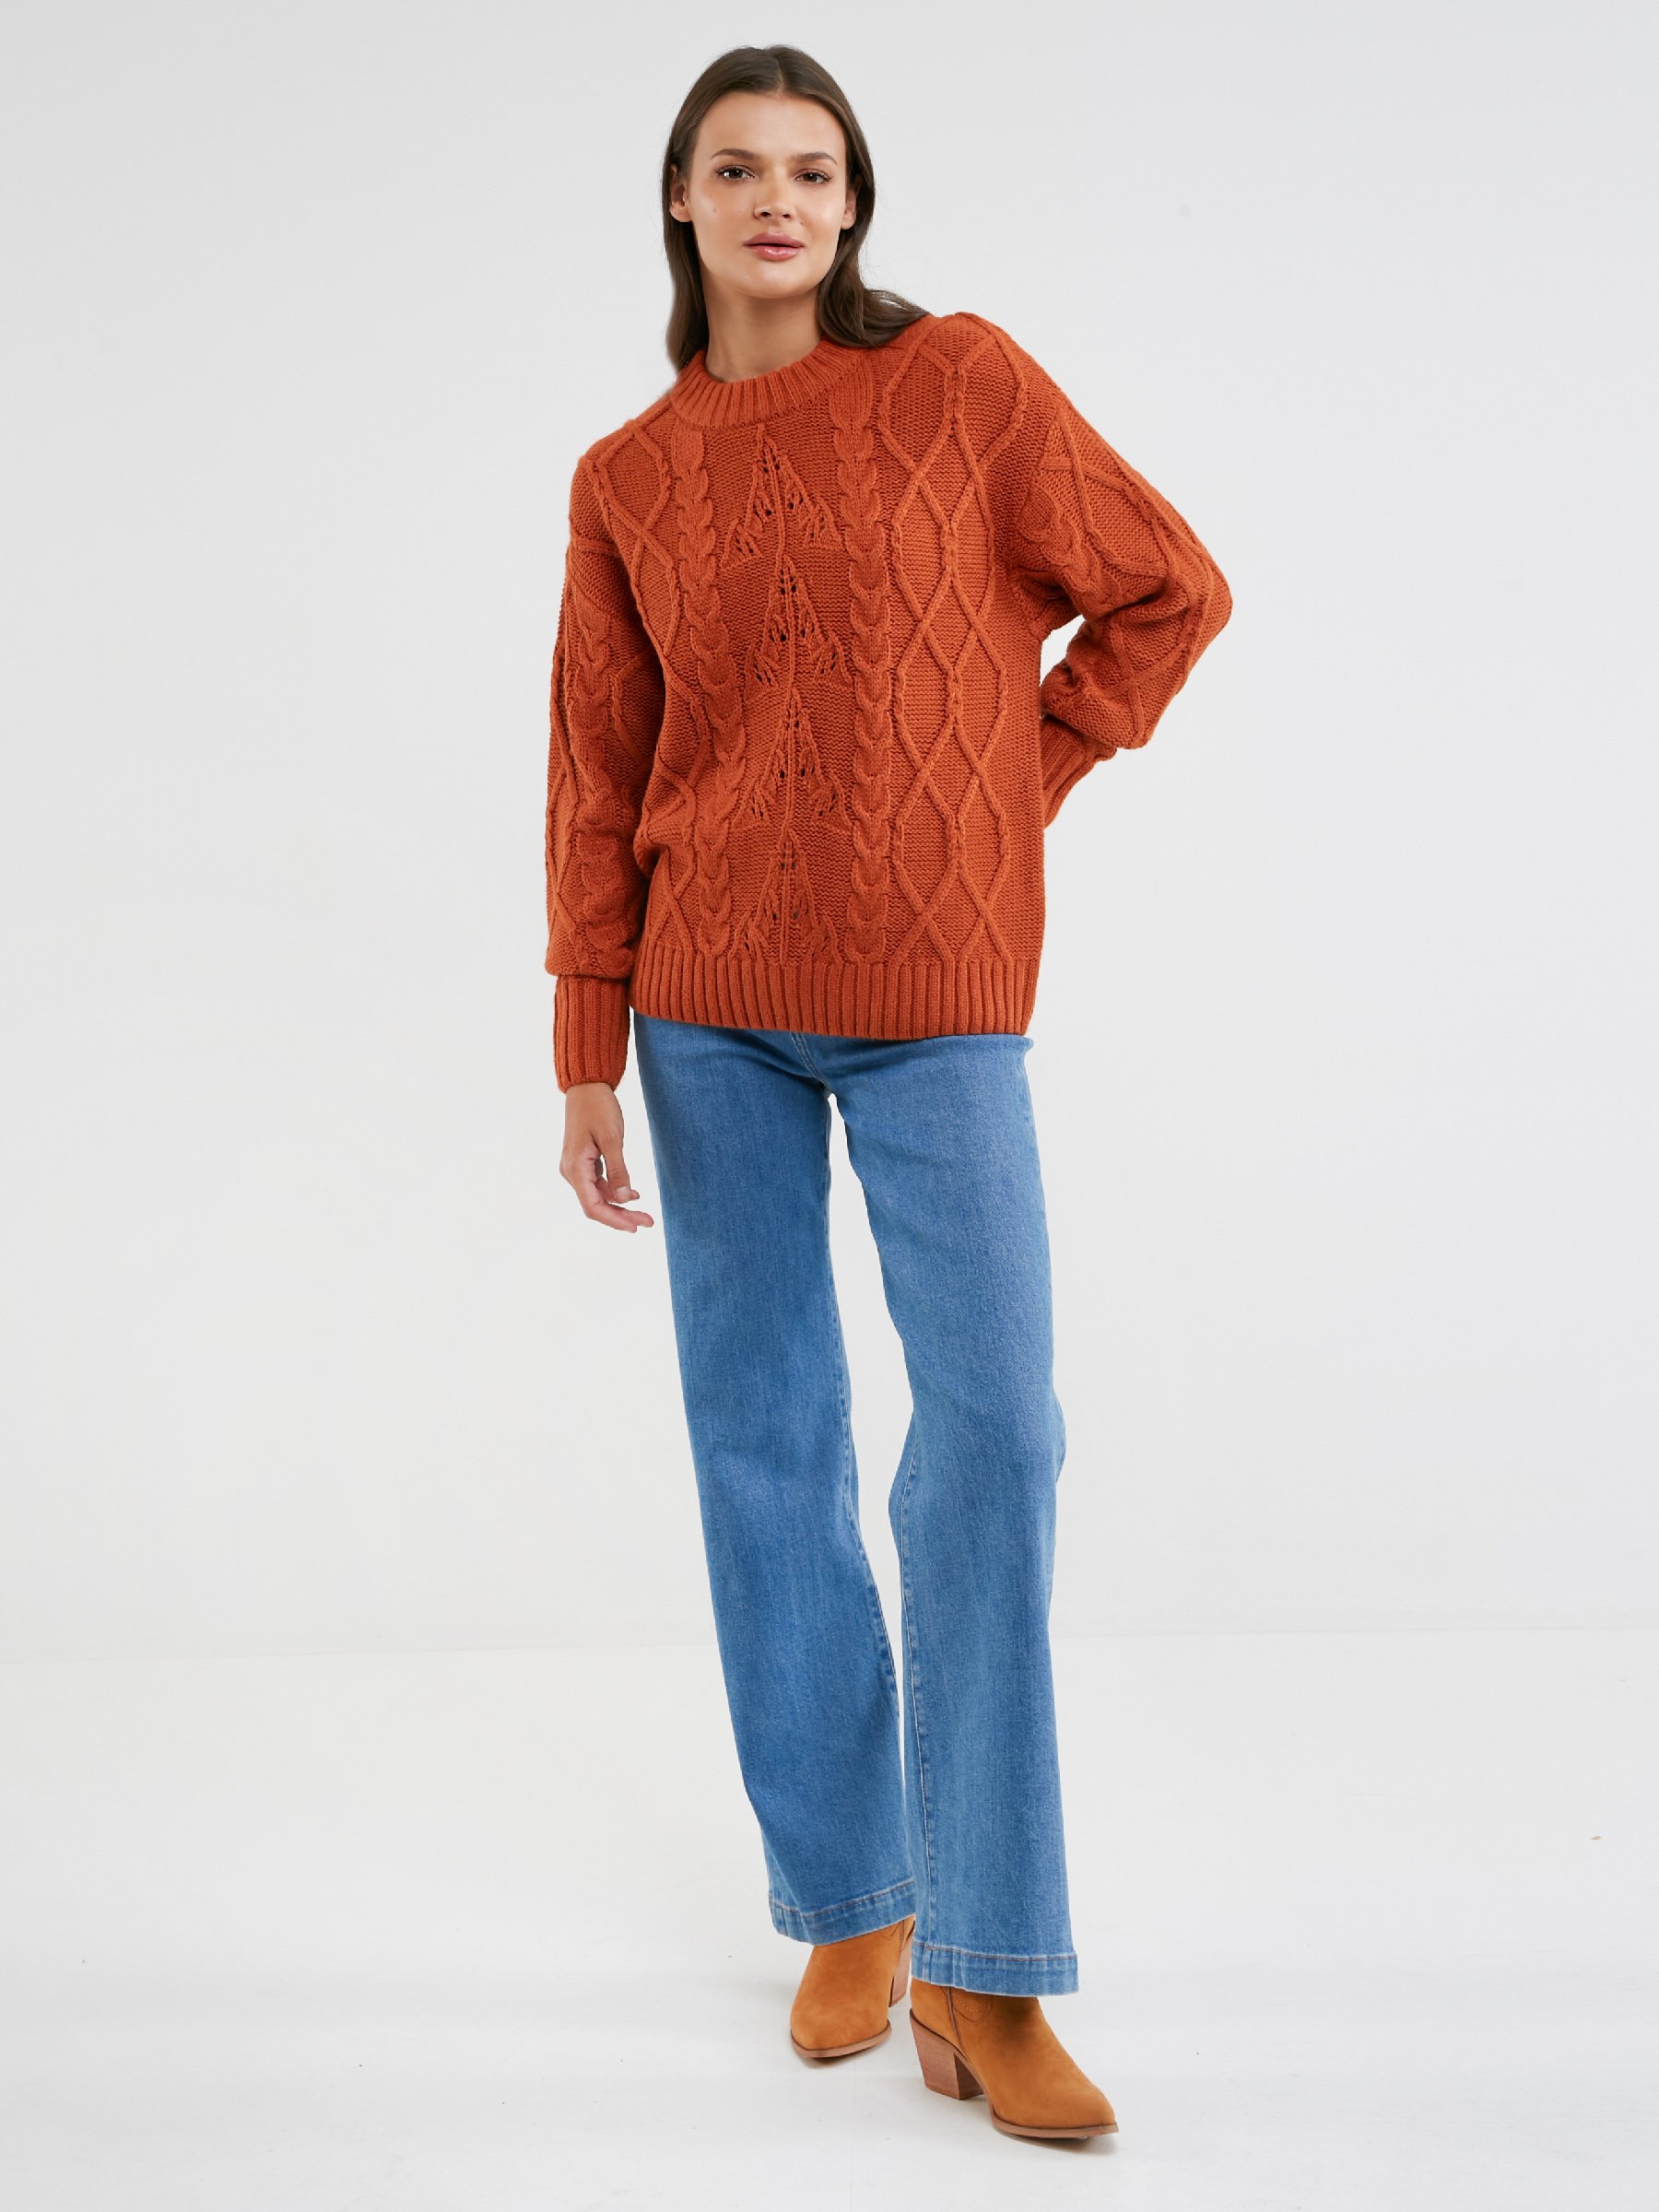 Big Star Woman's Sweater 161009